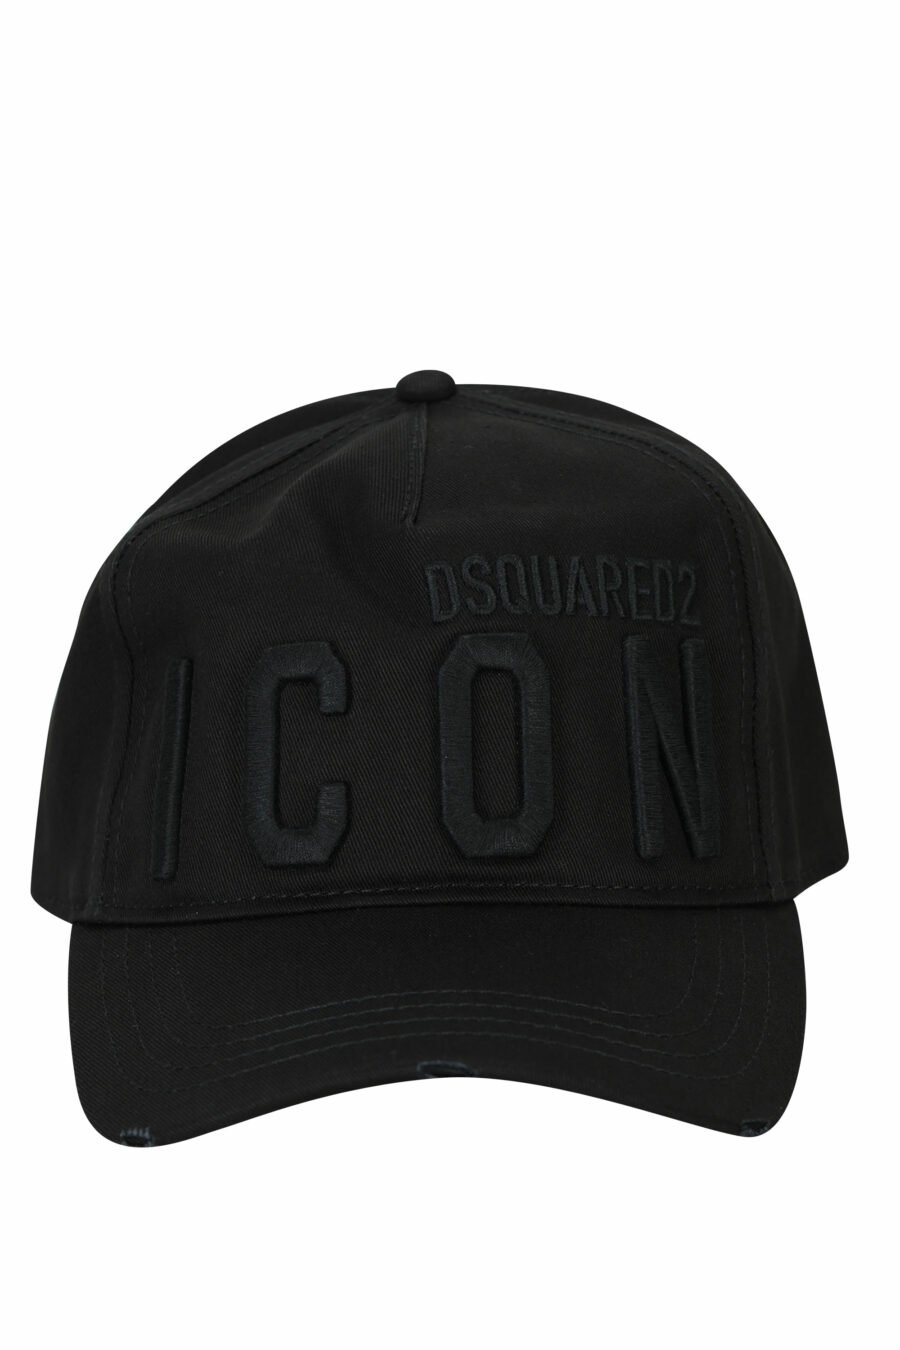 Schwarze Kappe mit einfarbigem "Icon" Maxilogo - 8055777275689